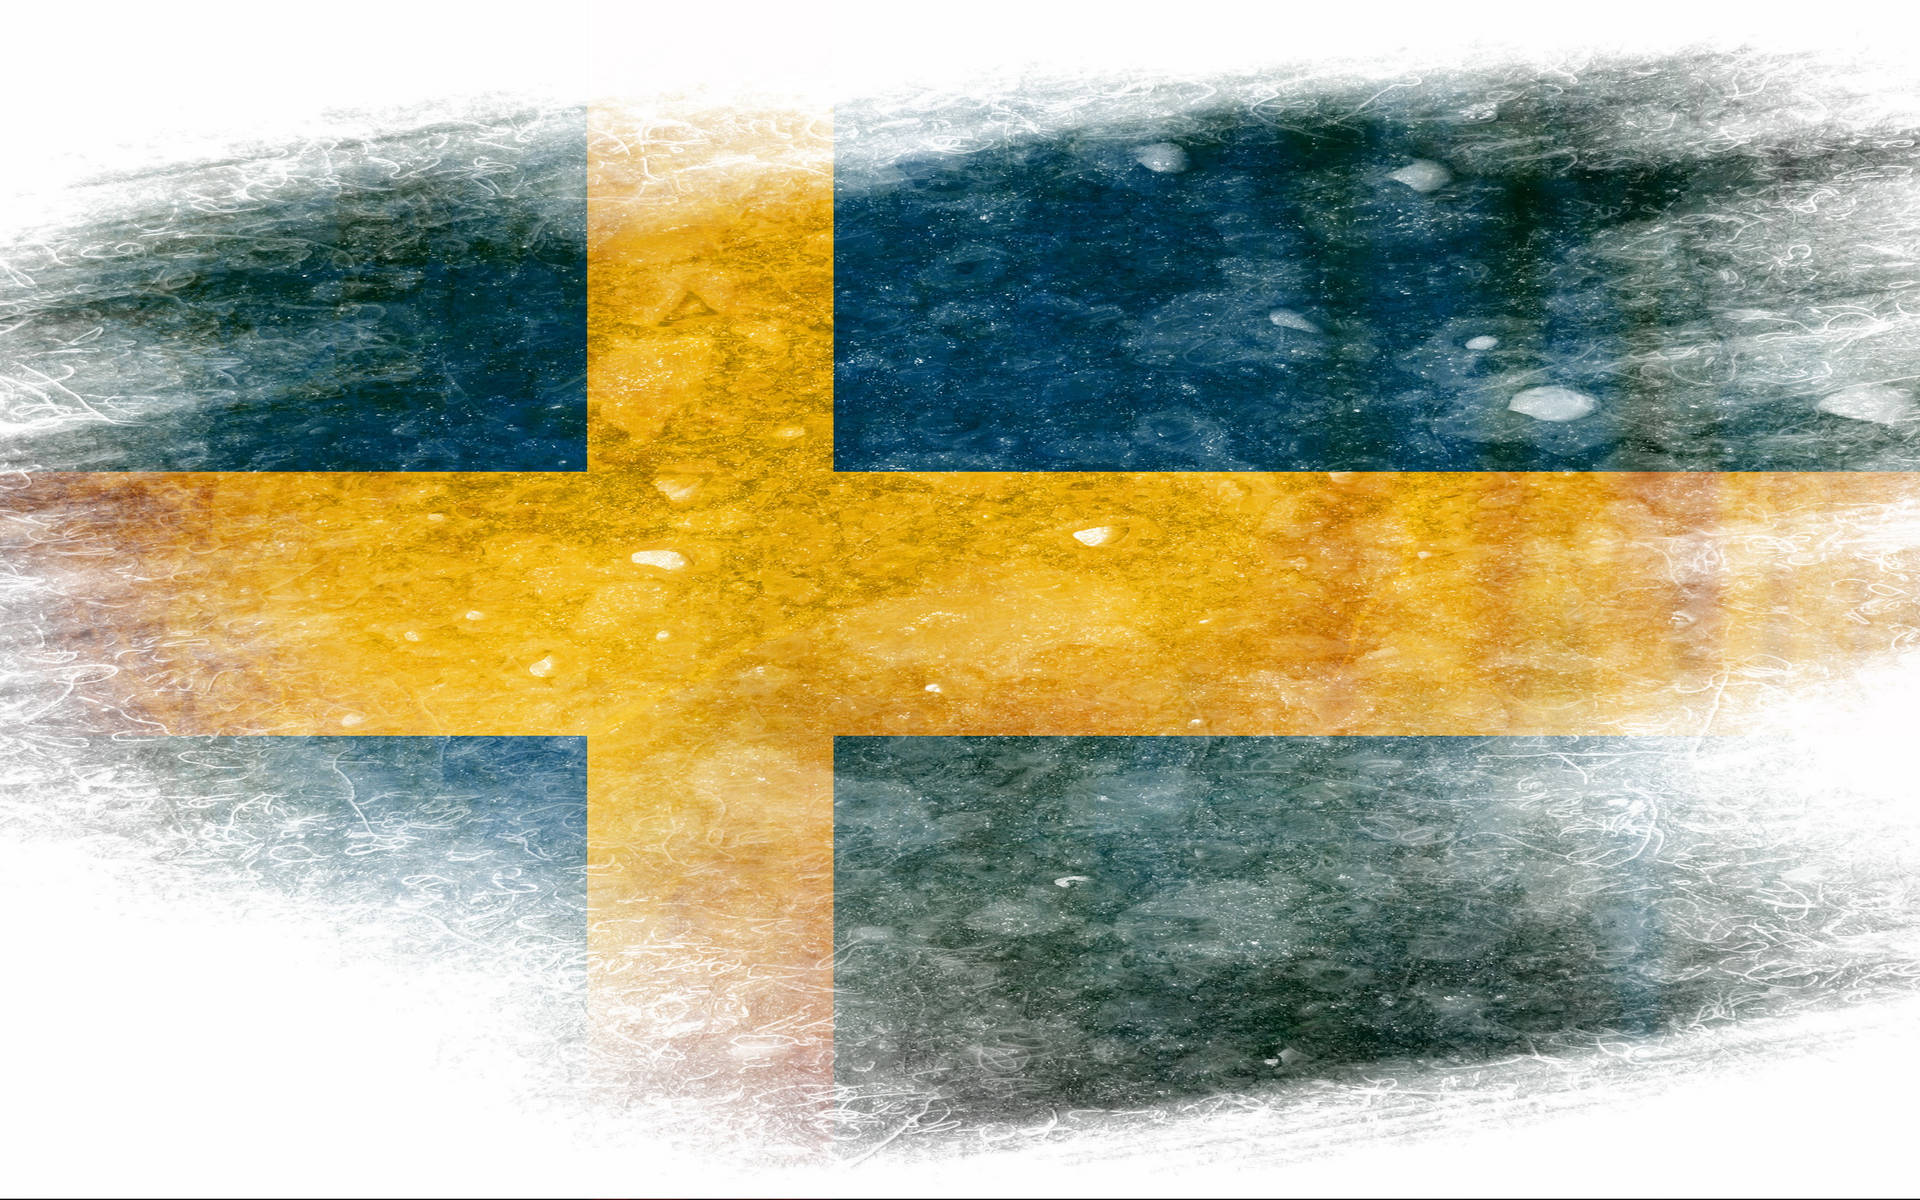 Sweden Flag Digital Art